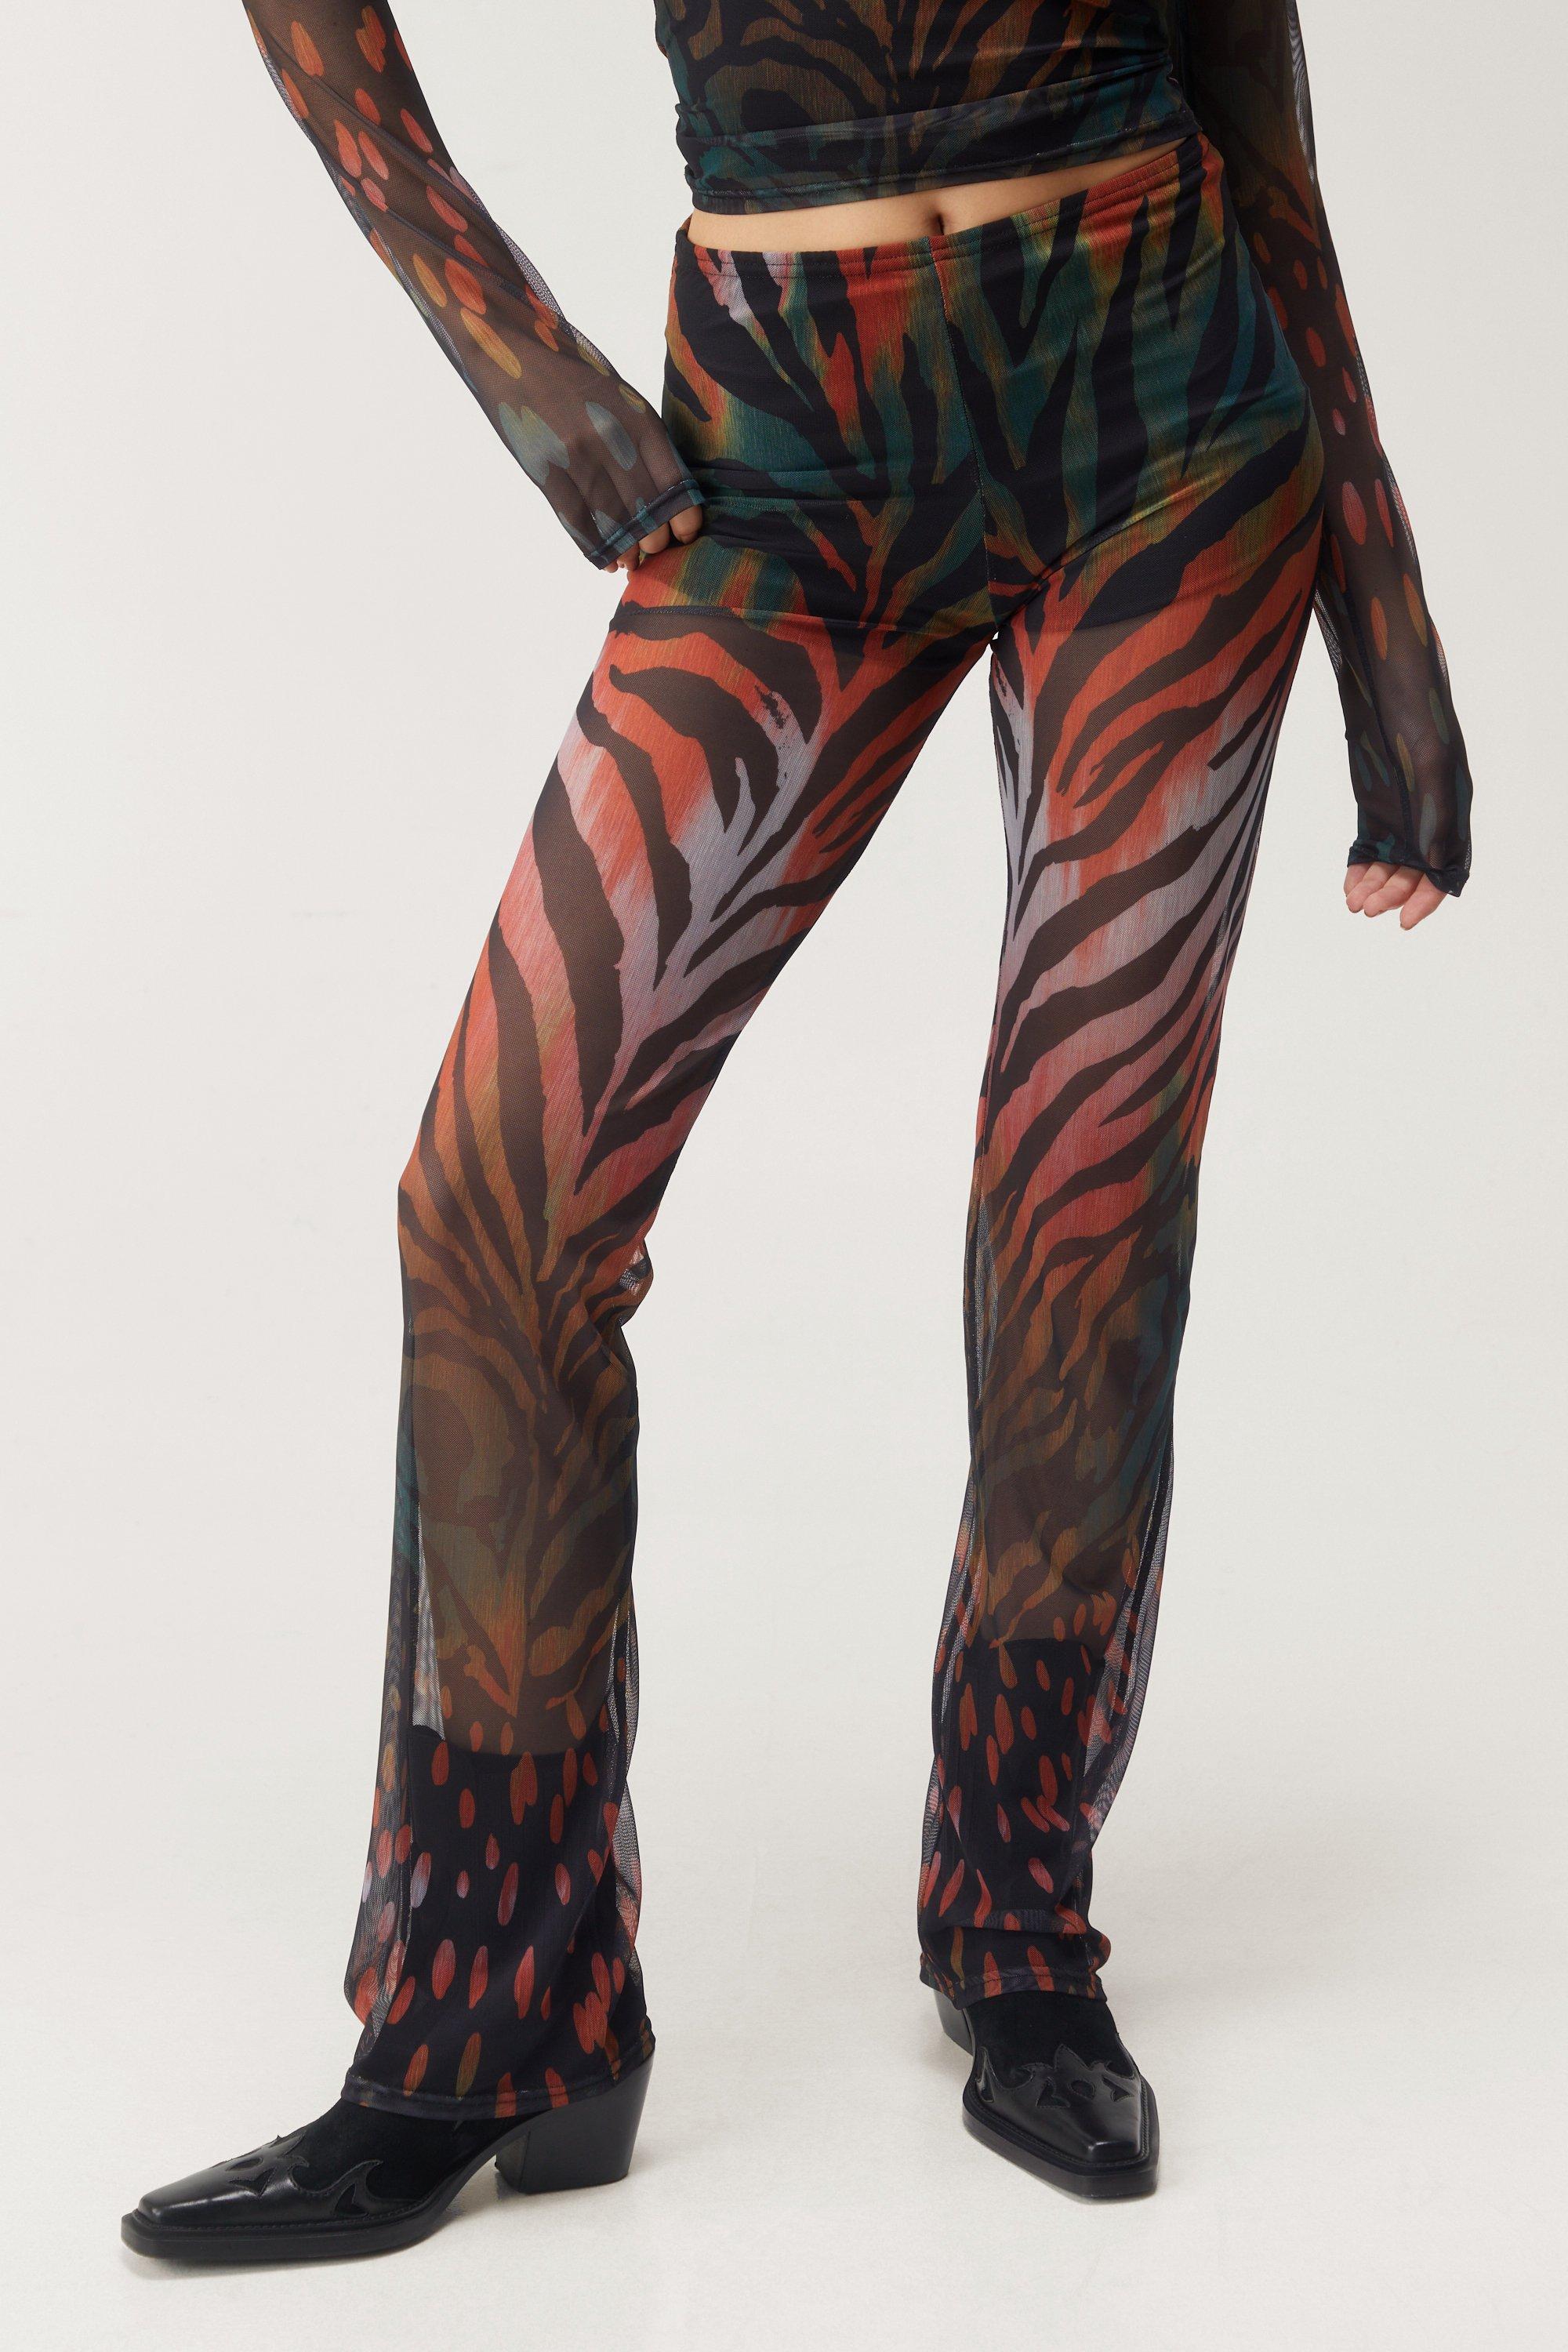 Zebra Printed Mesh Flare Pants